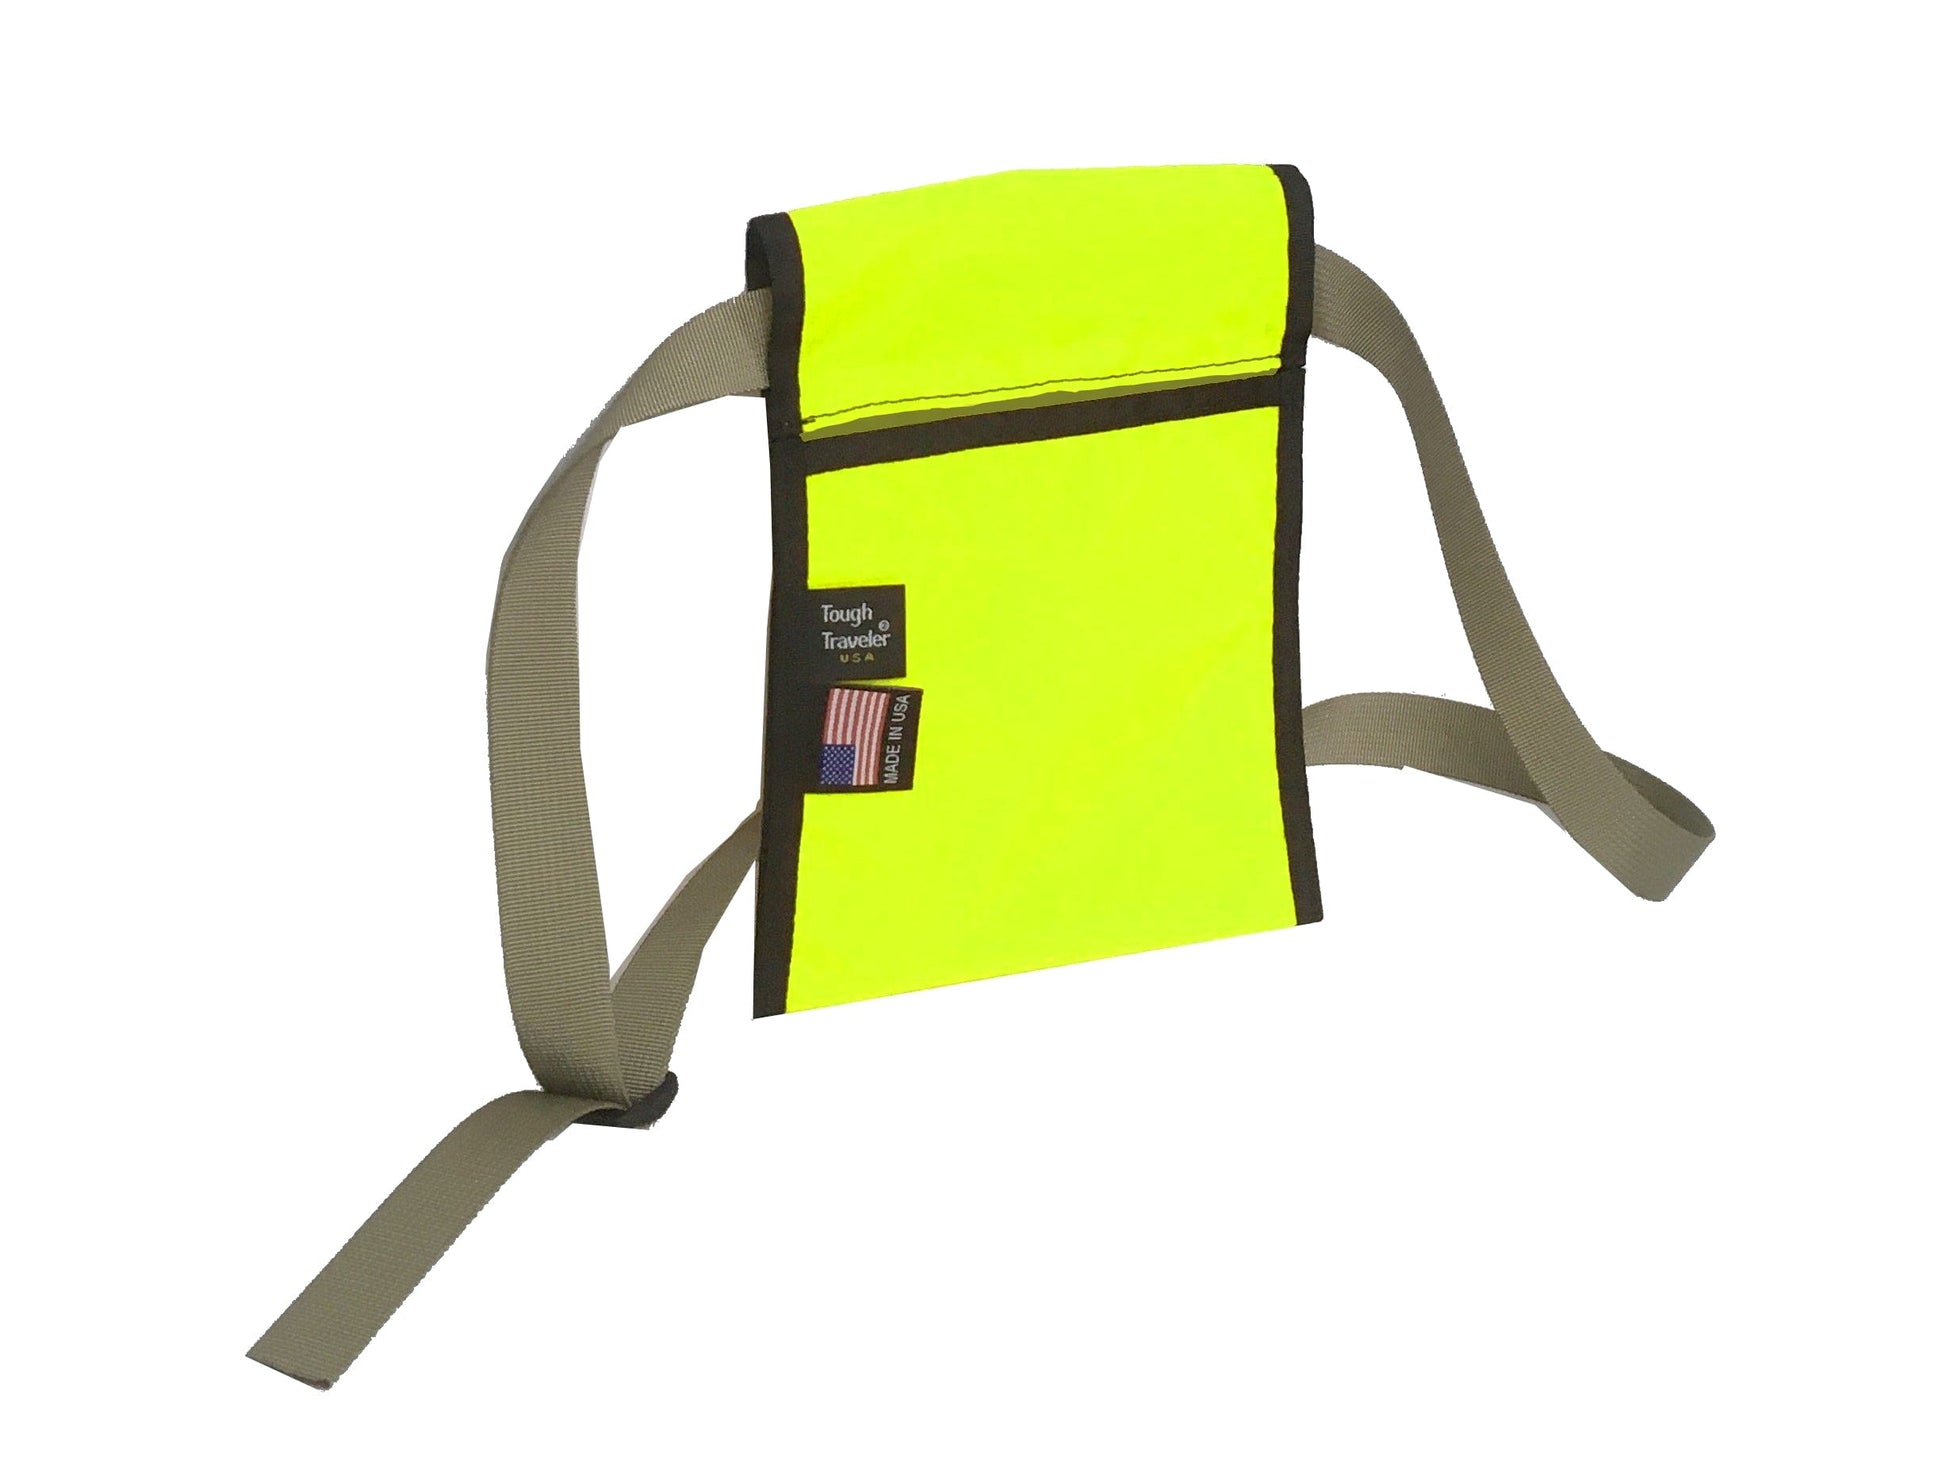 SPRING PARK Small Crossbody Cell Phone Bag for Women, Three-layer Zipper  Shoulder Handbag Wallet Card Hold Purse